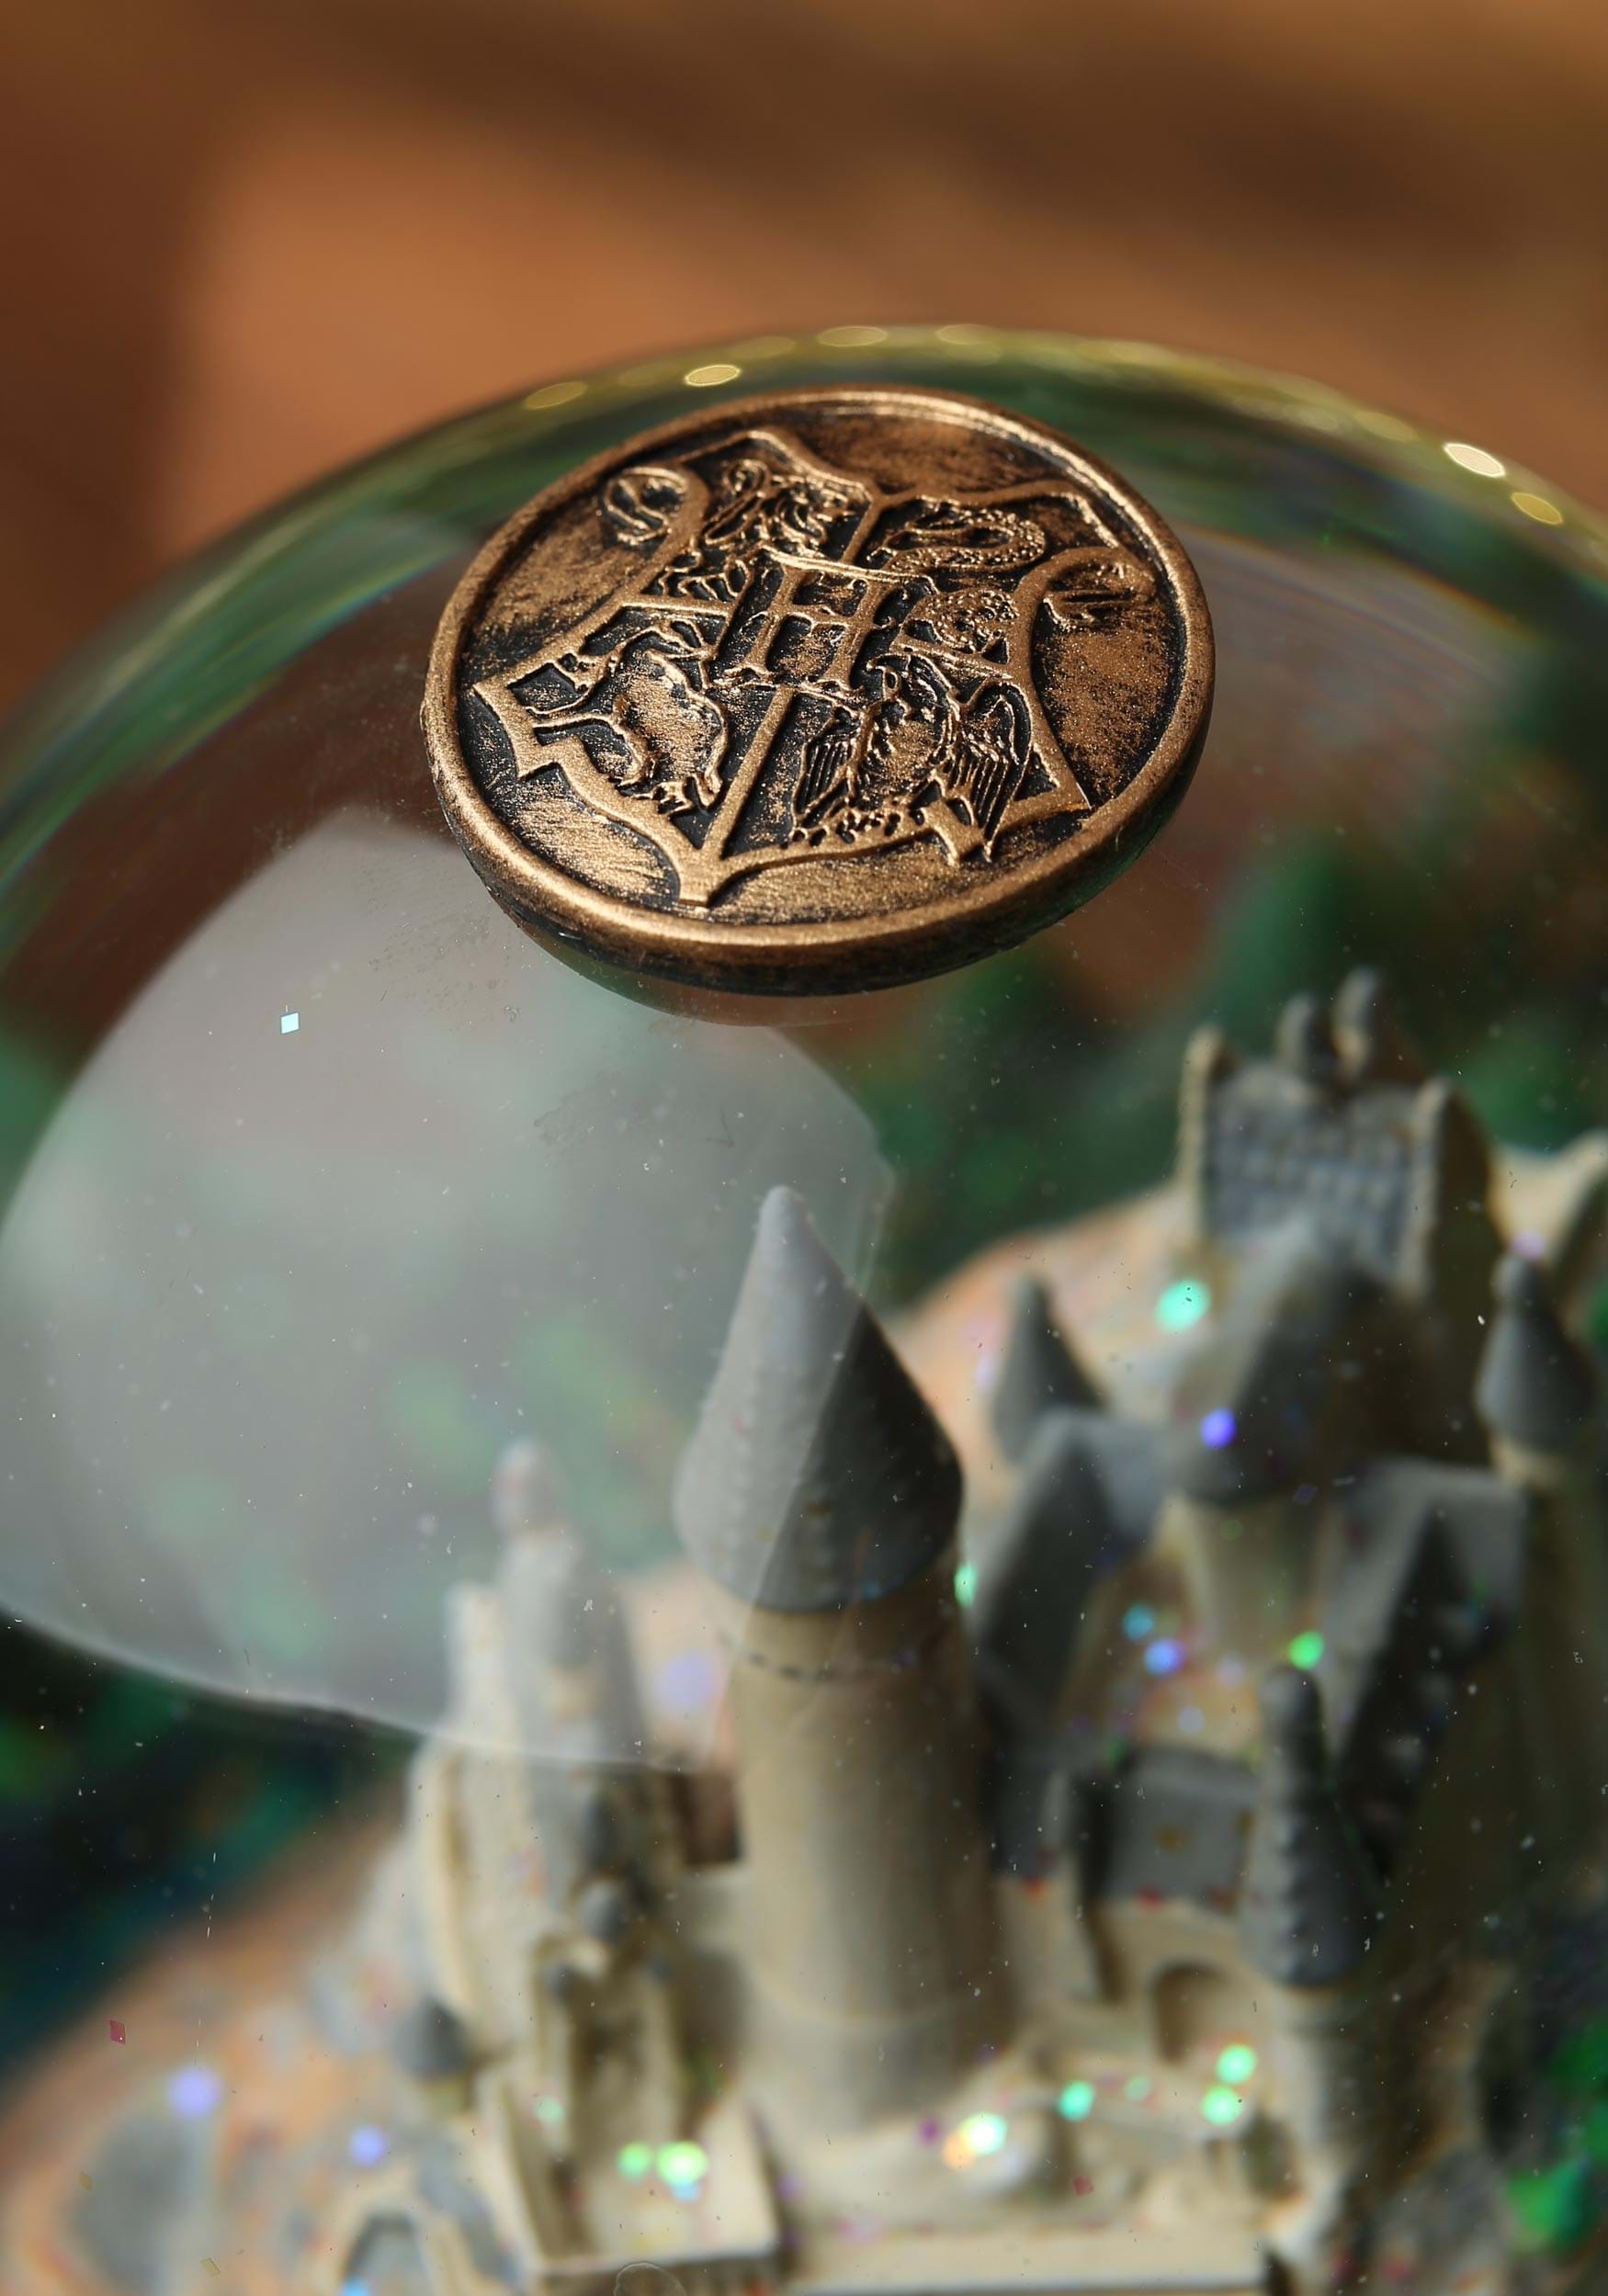 Hogwarts Castle - Snow Globe